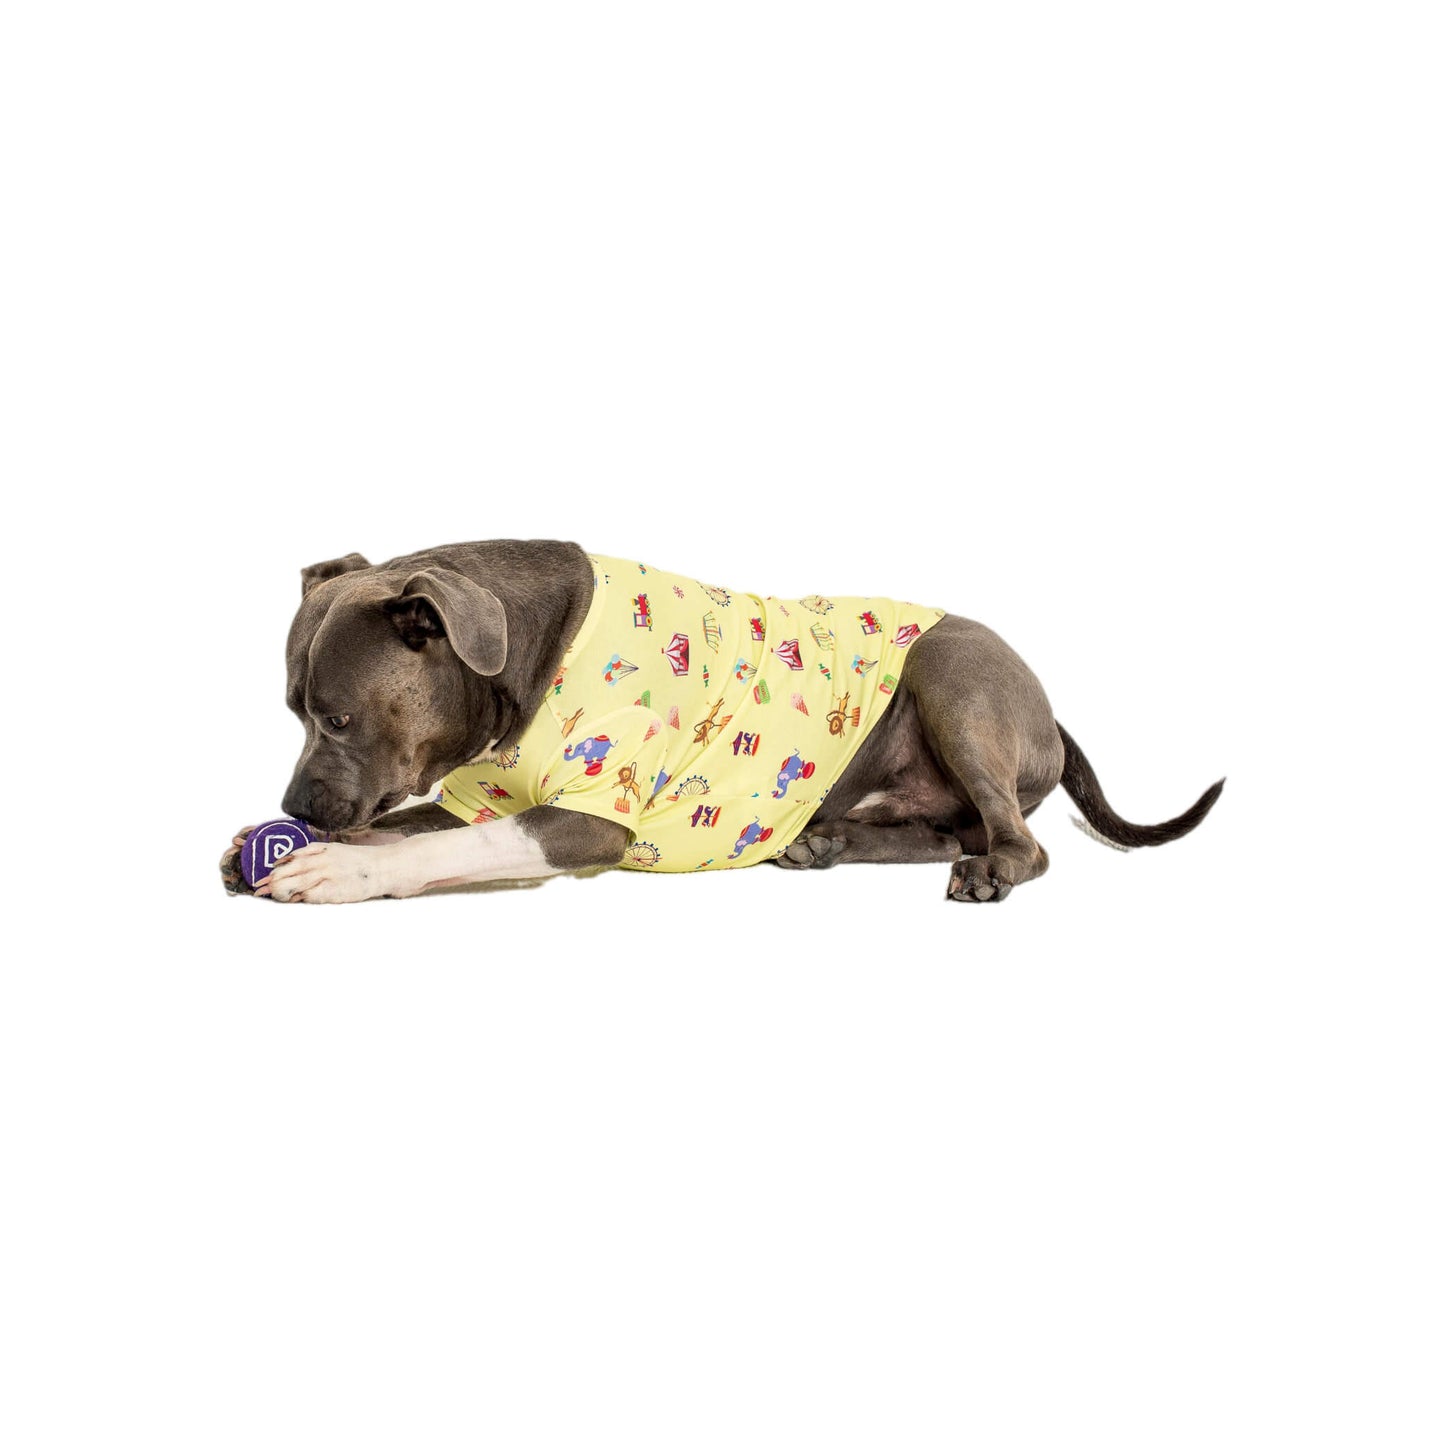 American Staffy laying down wearing Admit one dog shirt 